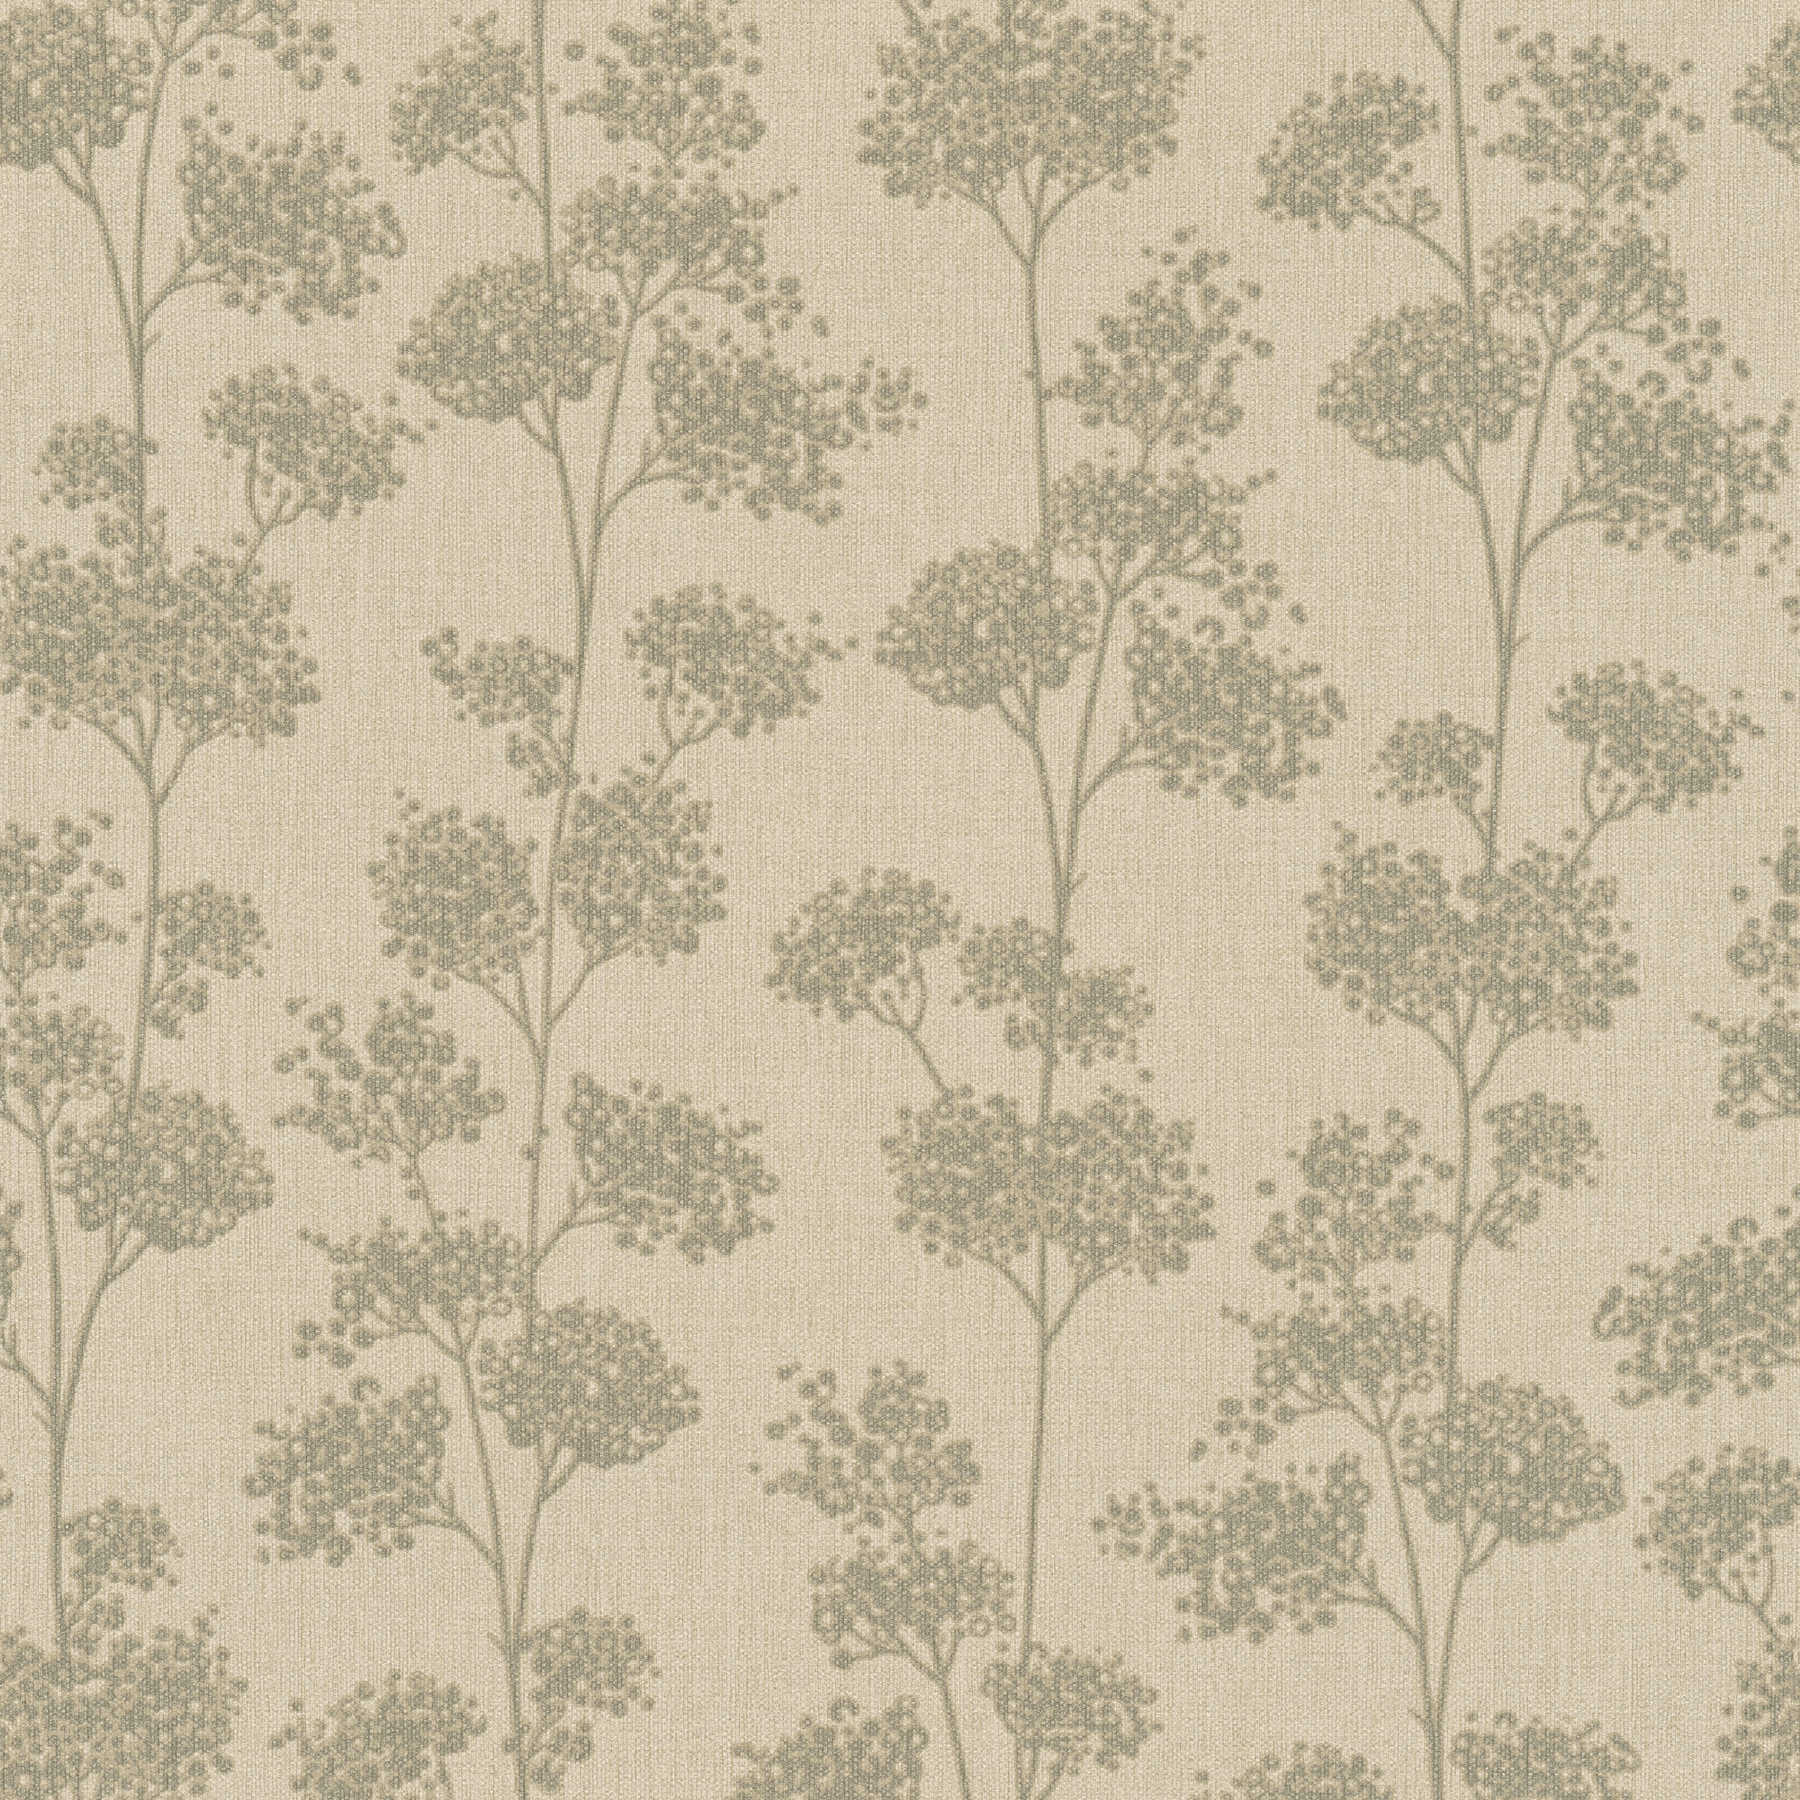 Linen optics wallpaper country style & nature motif - beige
